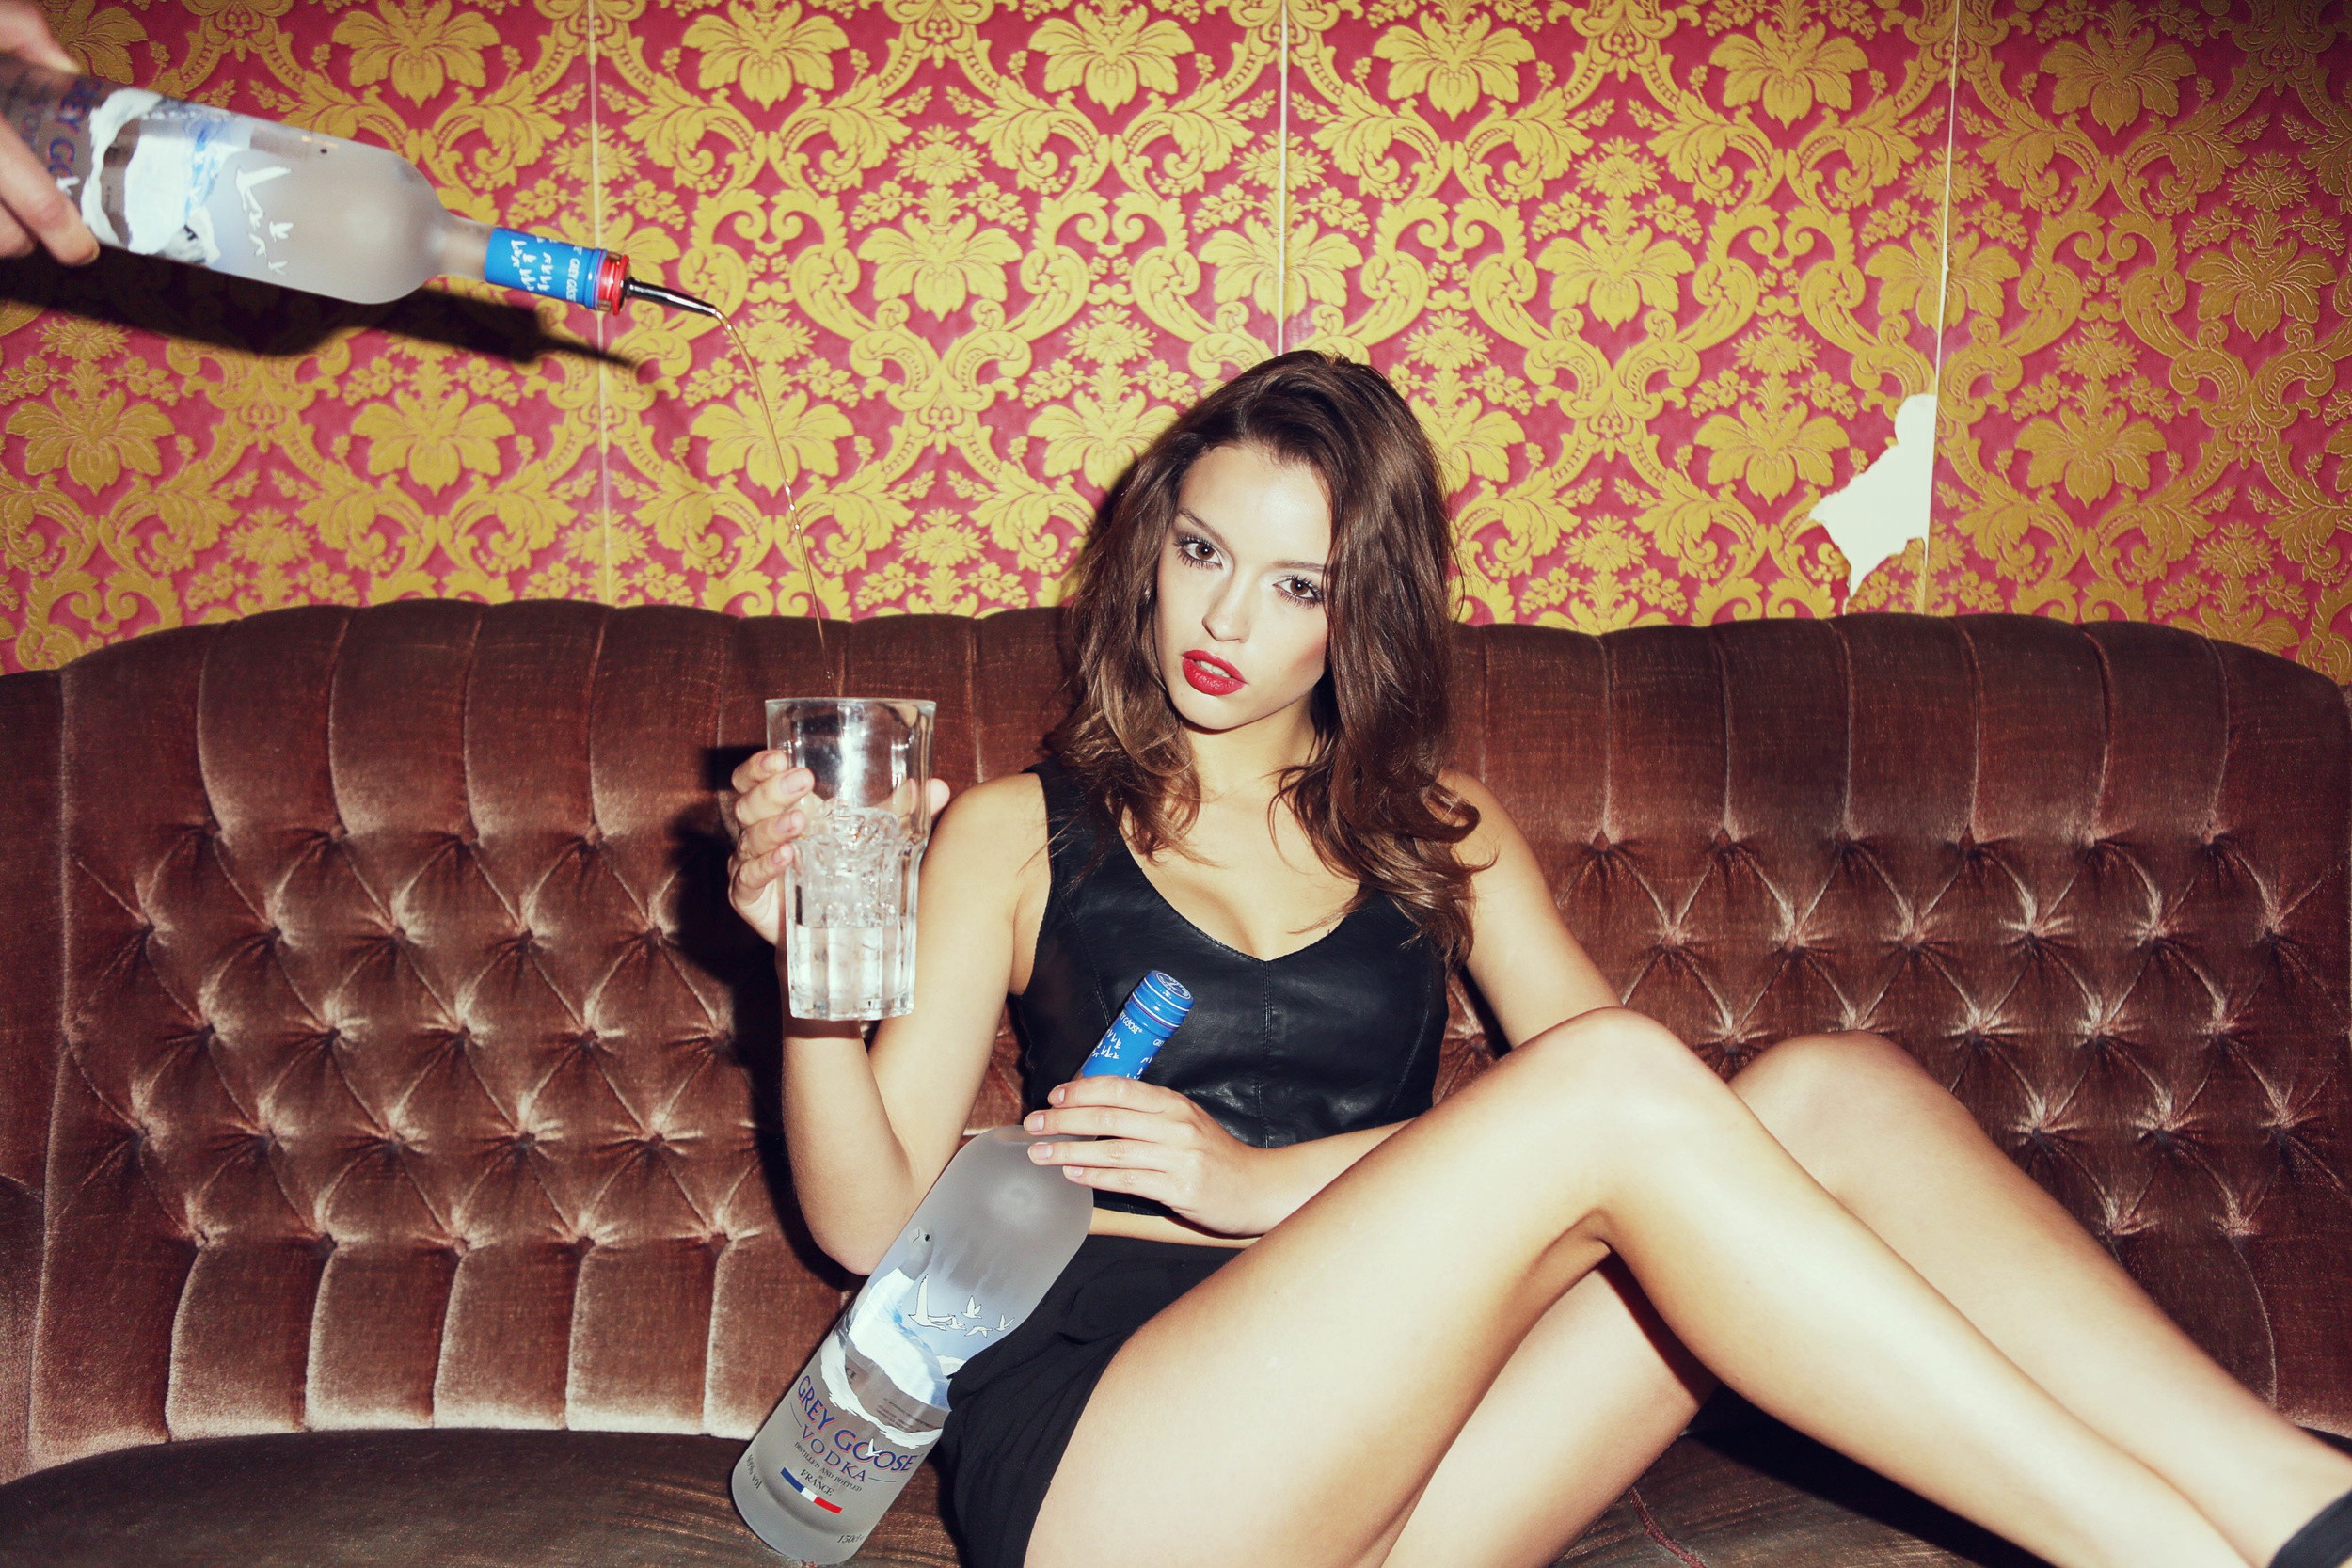 Women Kazim Gunyar Brunette Black Dress Legs Couch Red Lipstick Glass Vodka Alcohol Drink Looking At 2500x1667